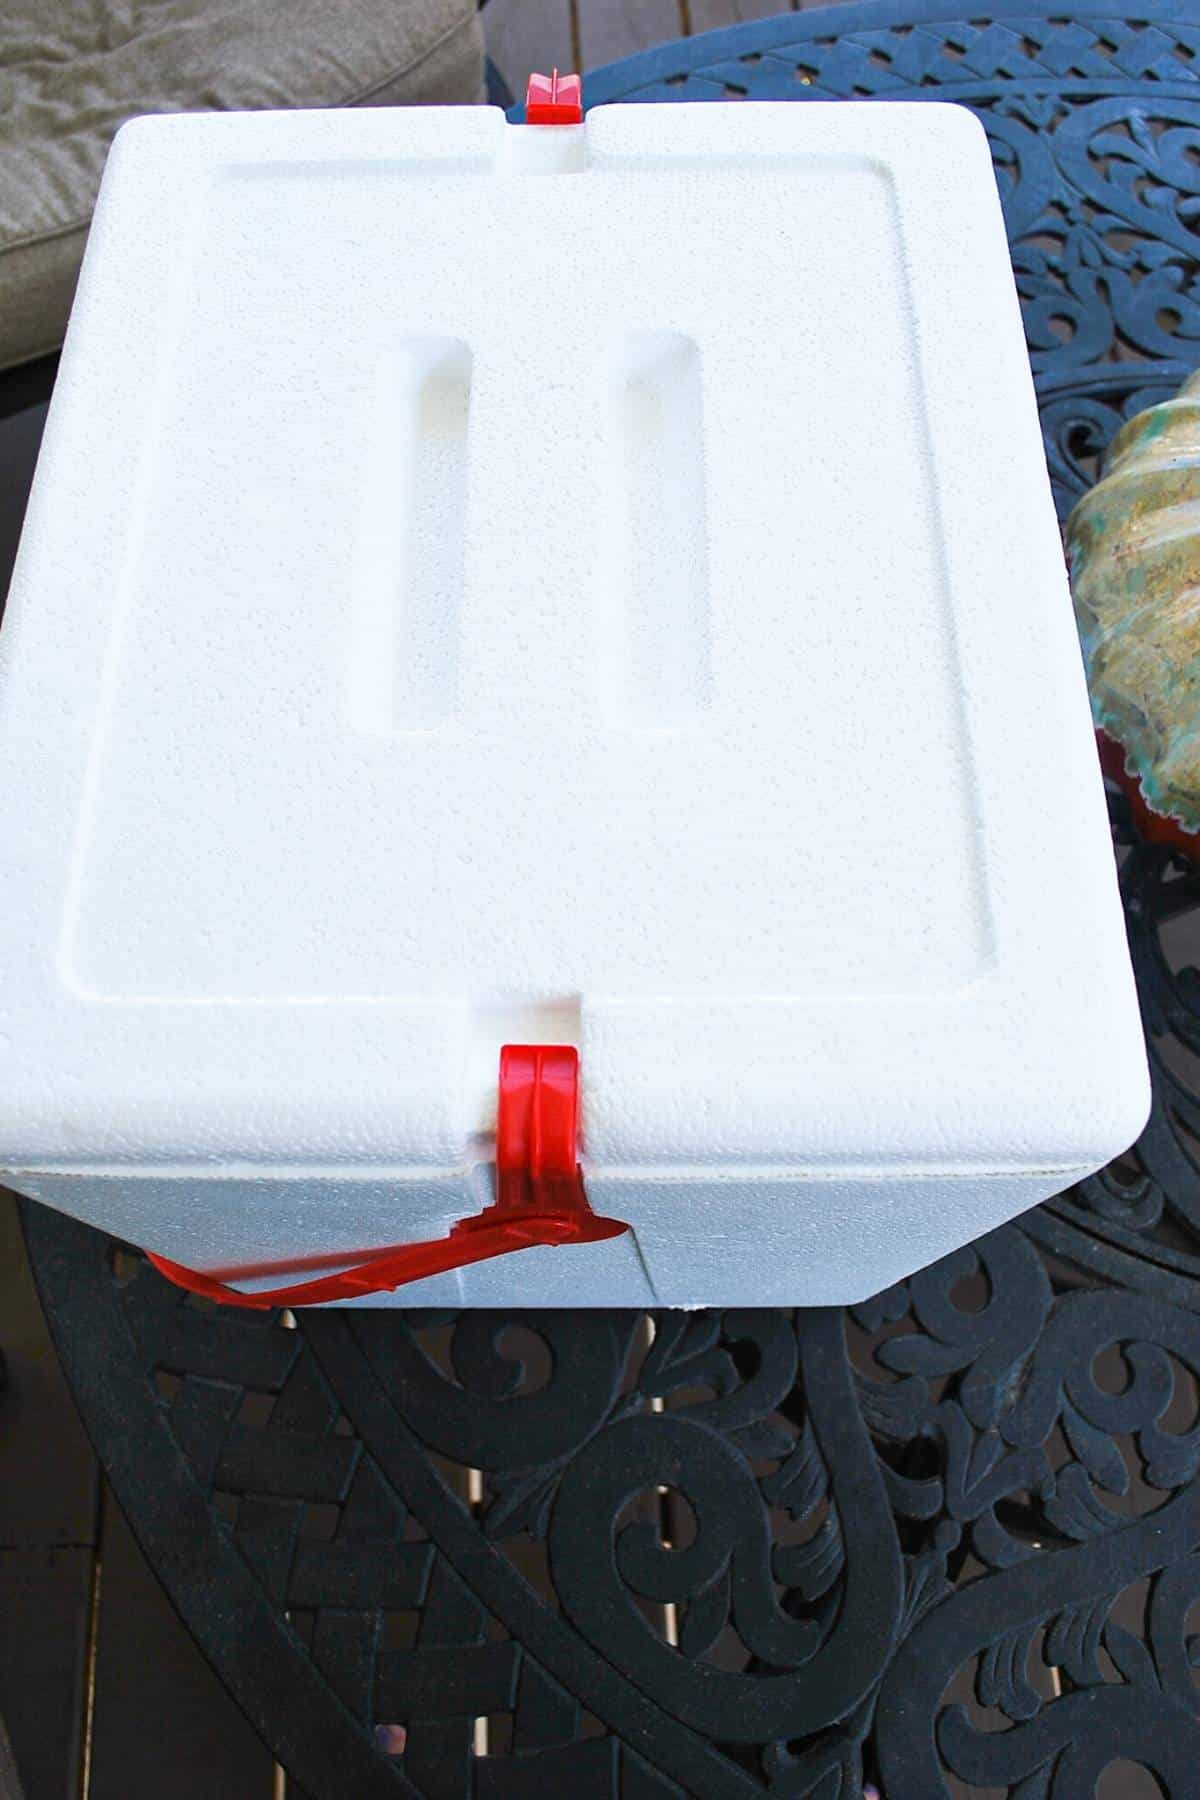 styrofoam cooler for resting a smoked brisket